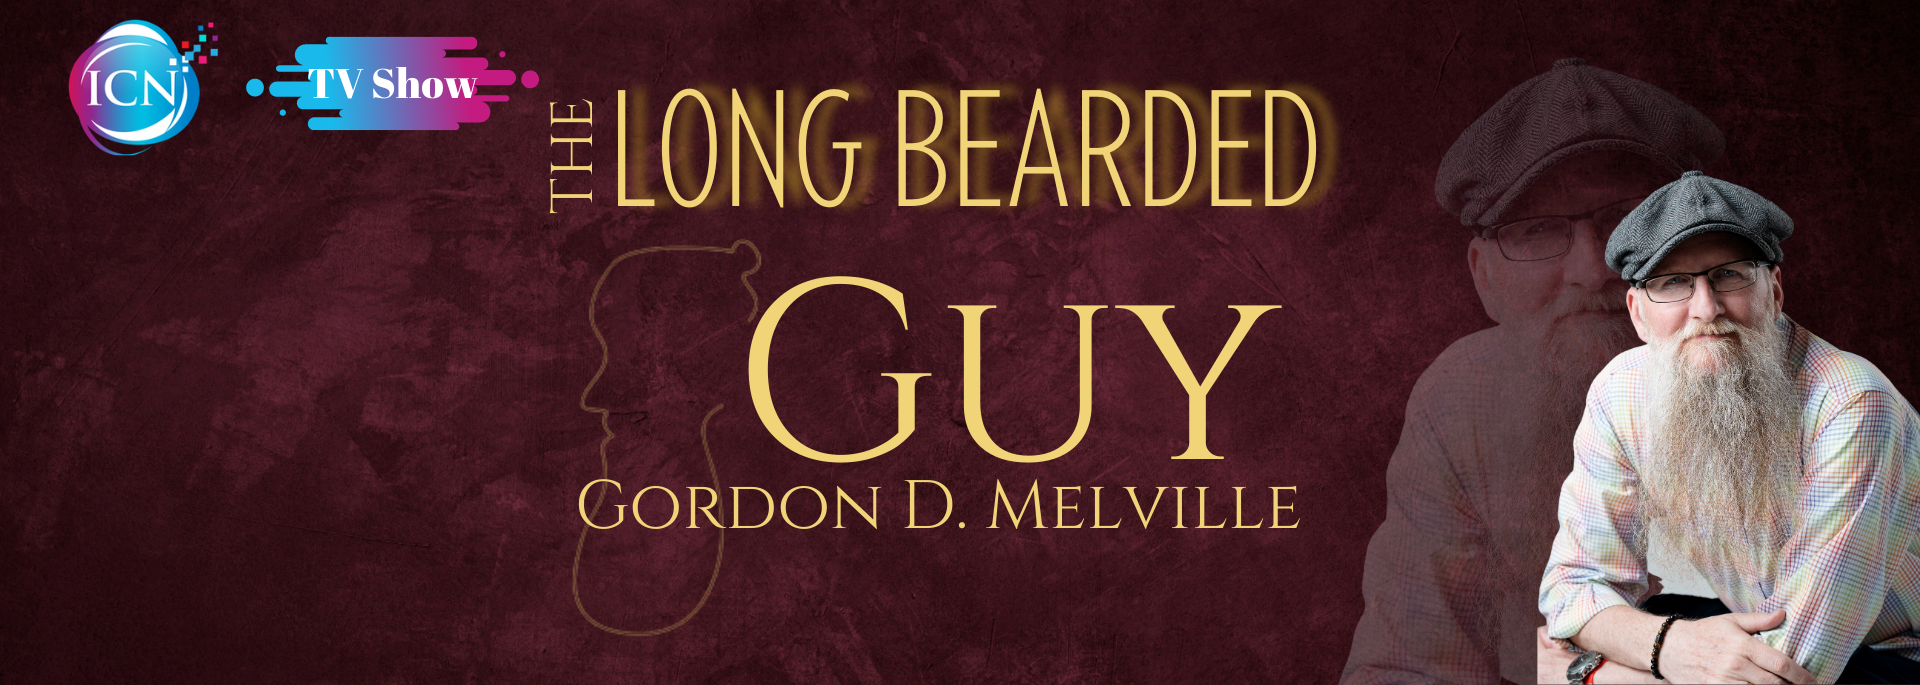 The Long Bearded Guy With Gordon D Melville